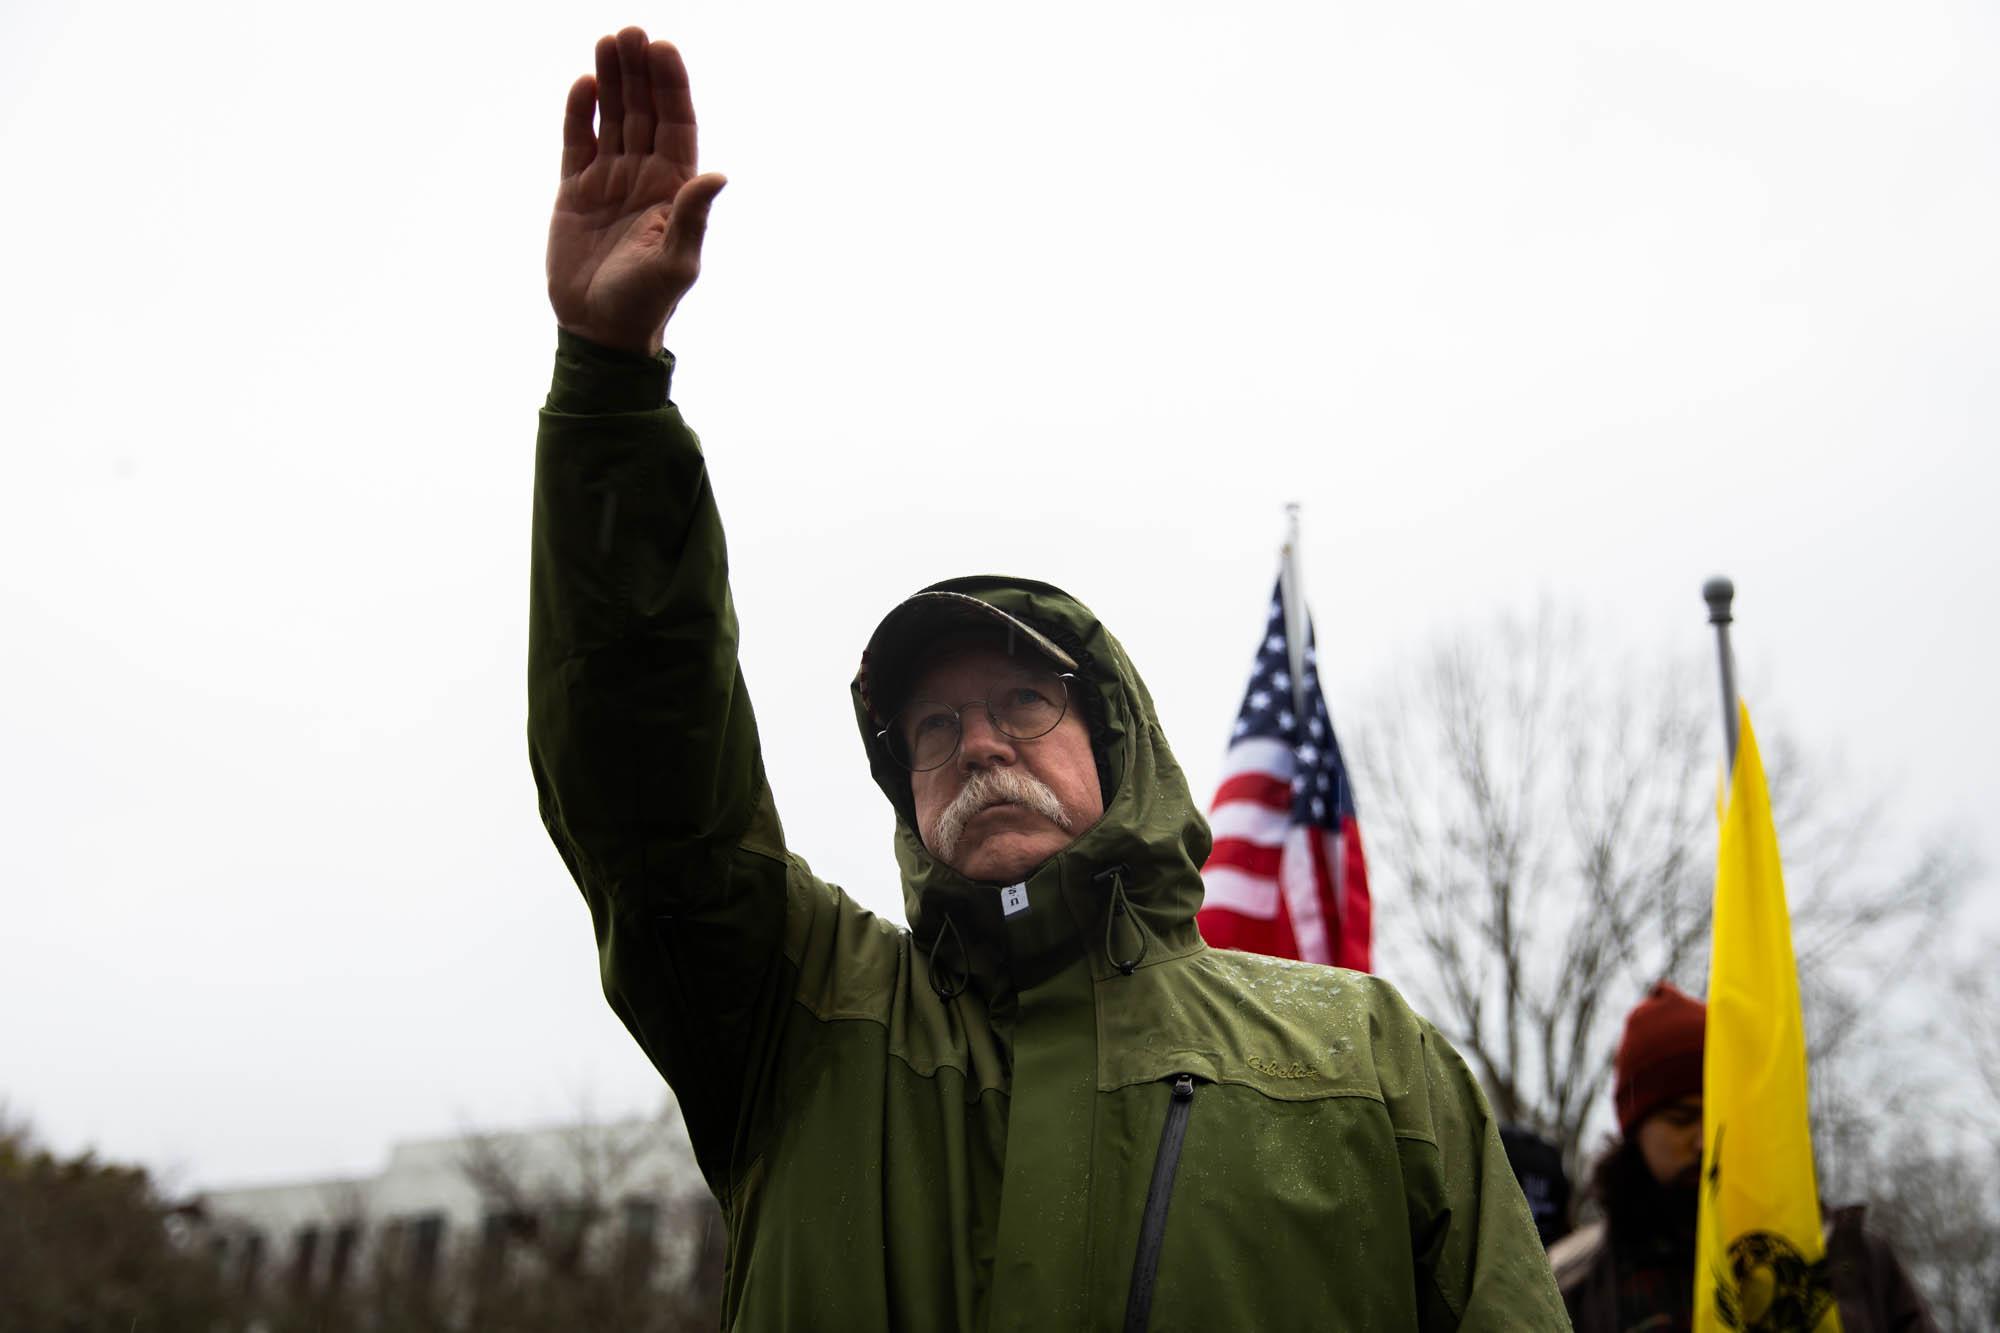 American Patriot - A man raises his arm in a Nazi salute during a far-right...